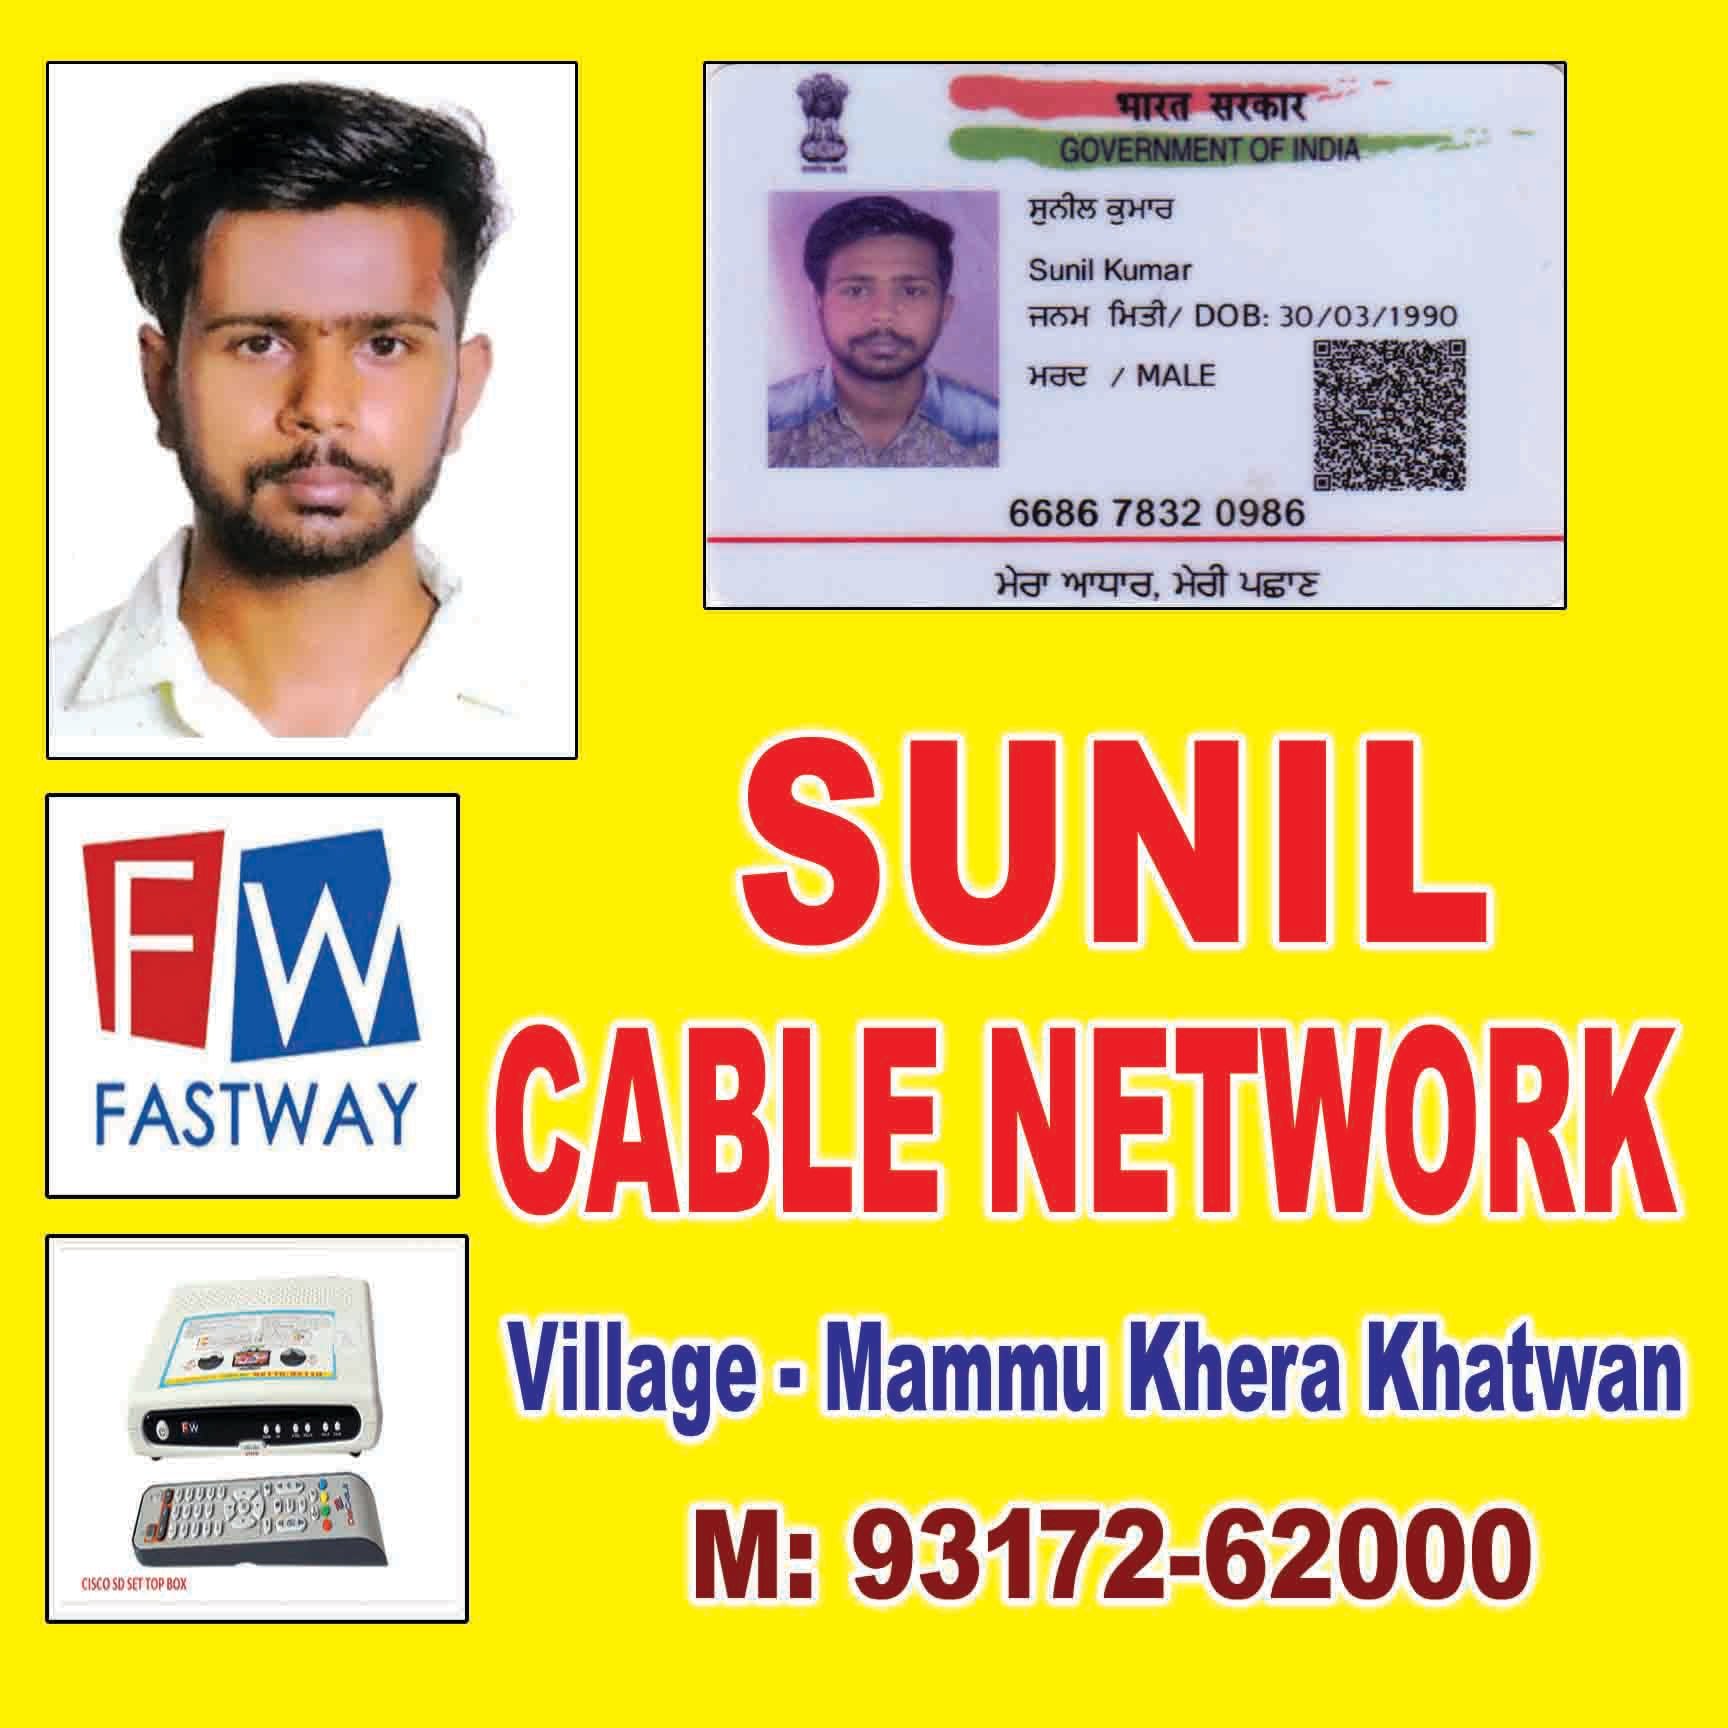 Sunil Cable Network